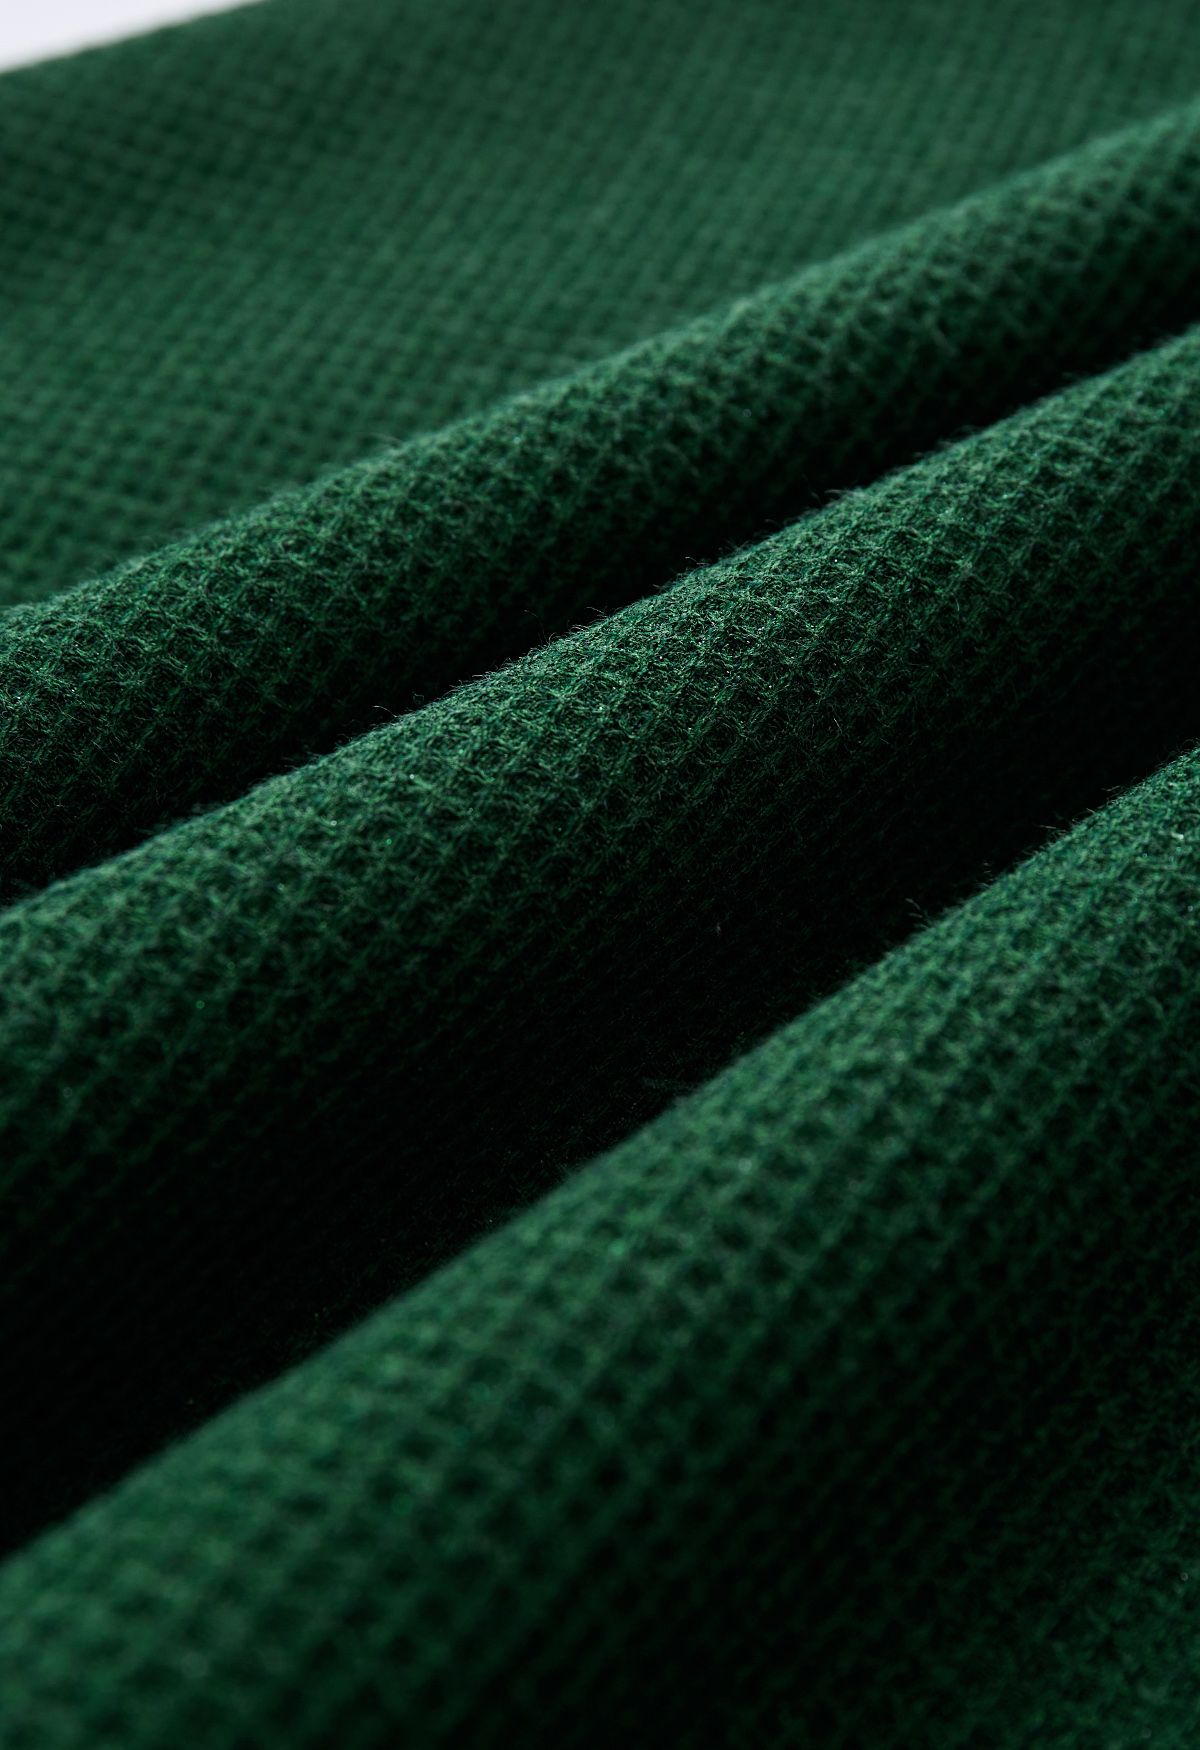 Waffle Texture A-Line Midi Skirt in Dark Green